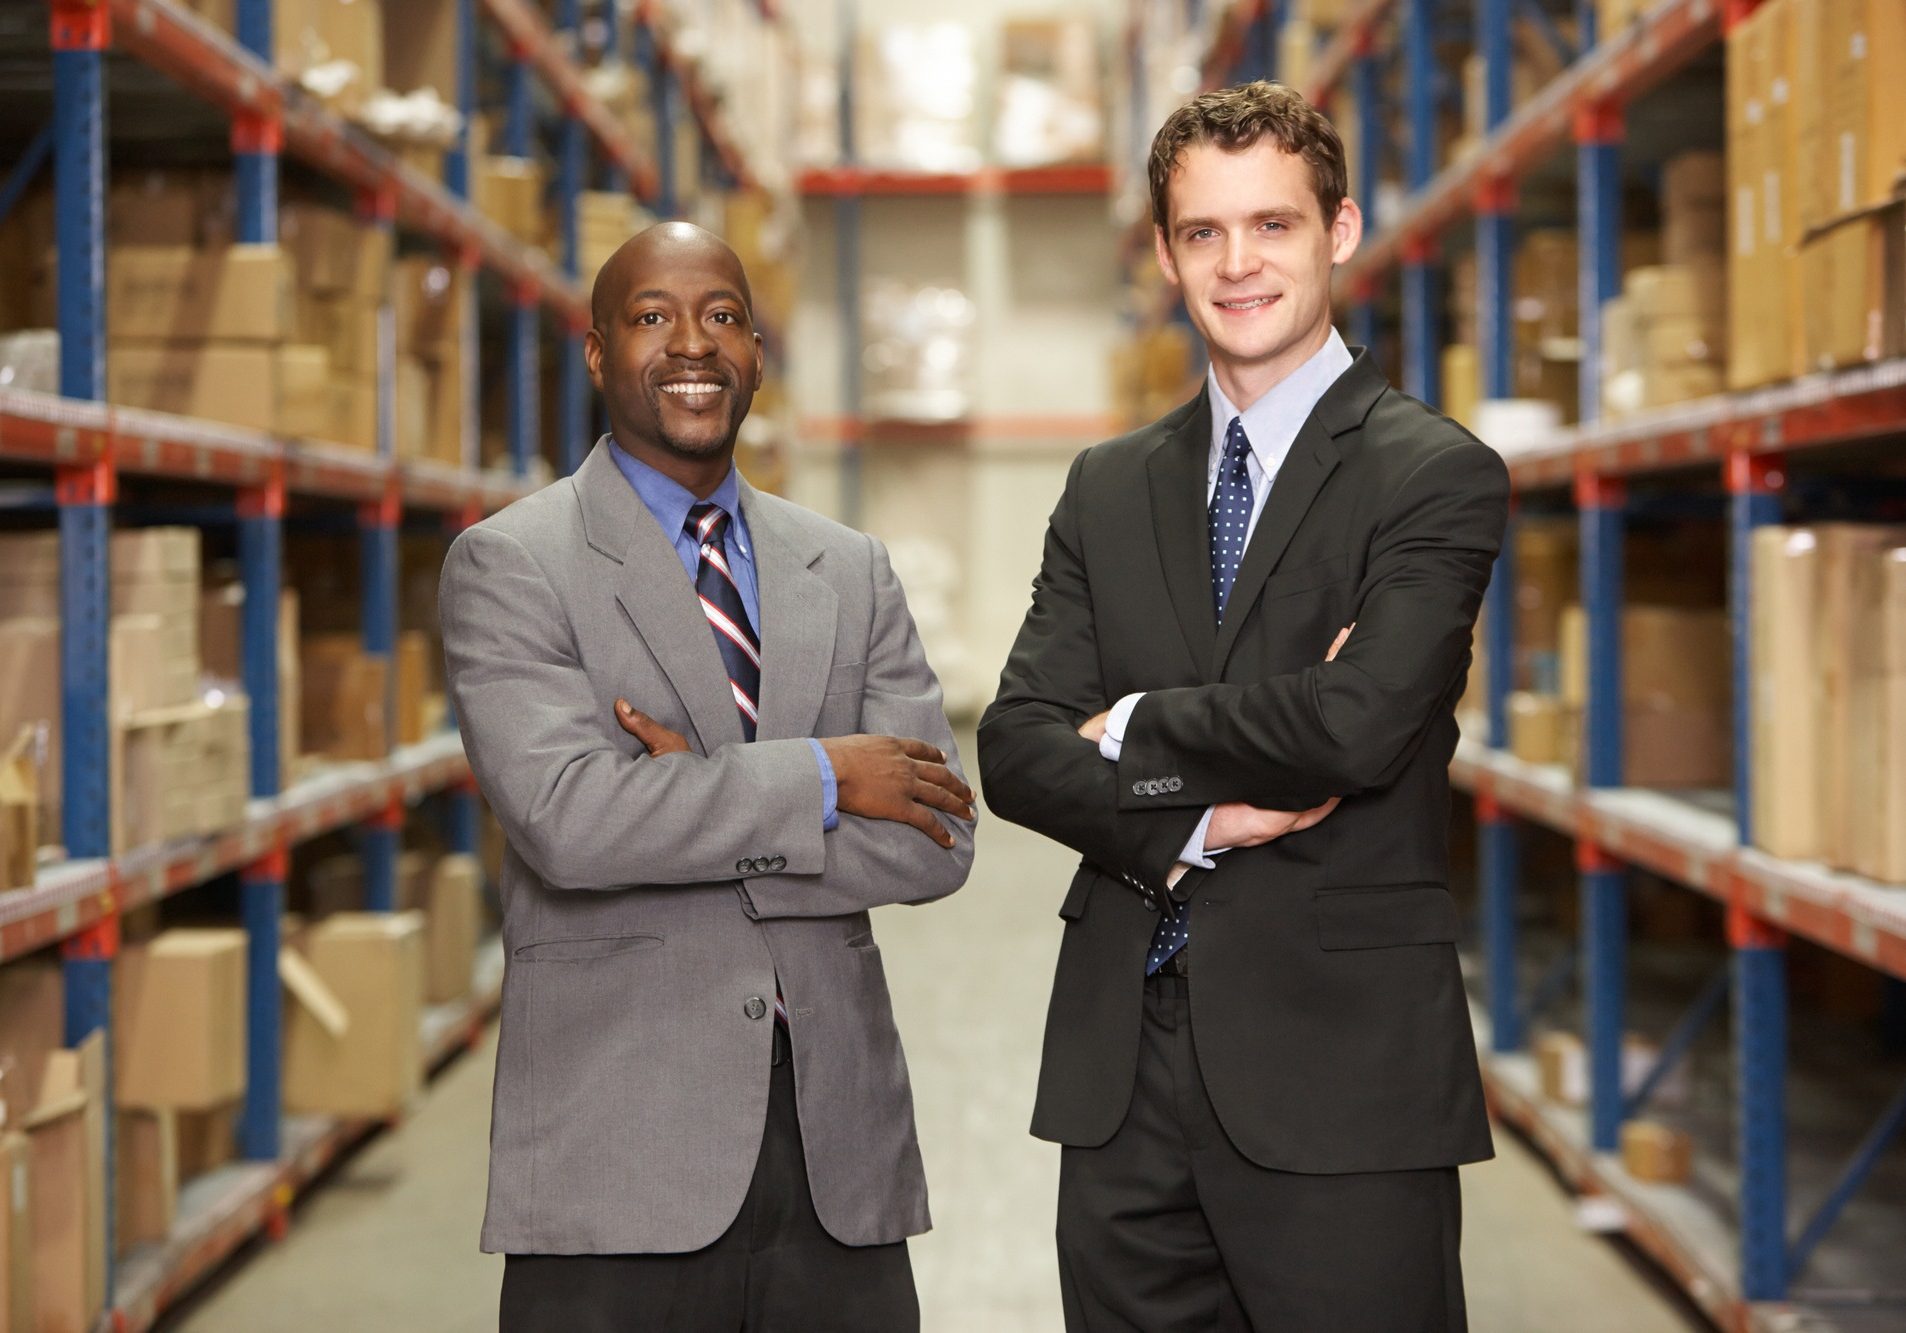 Portrait Of Two Businessmen In Warehouse